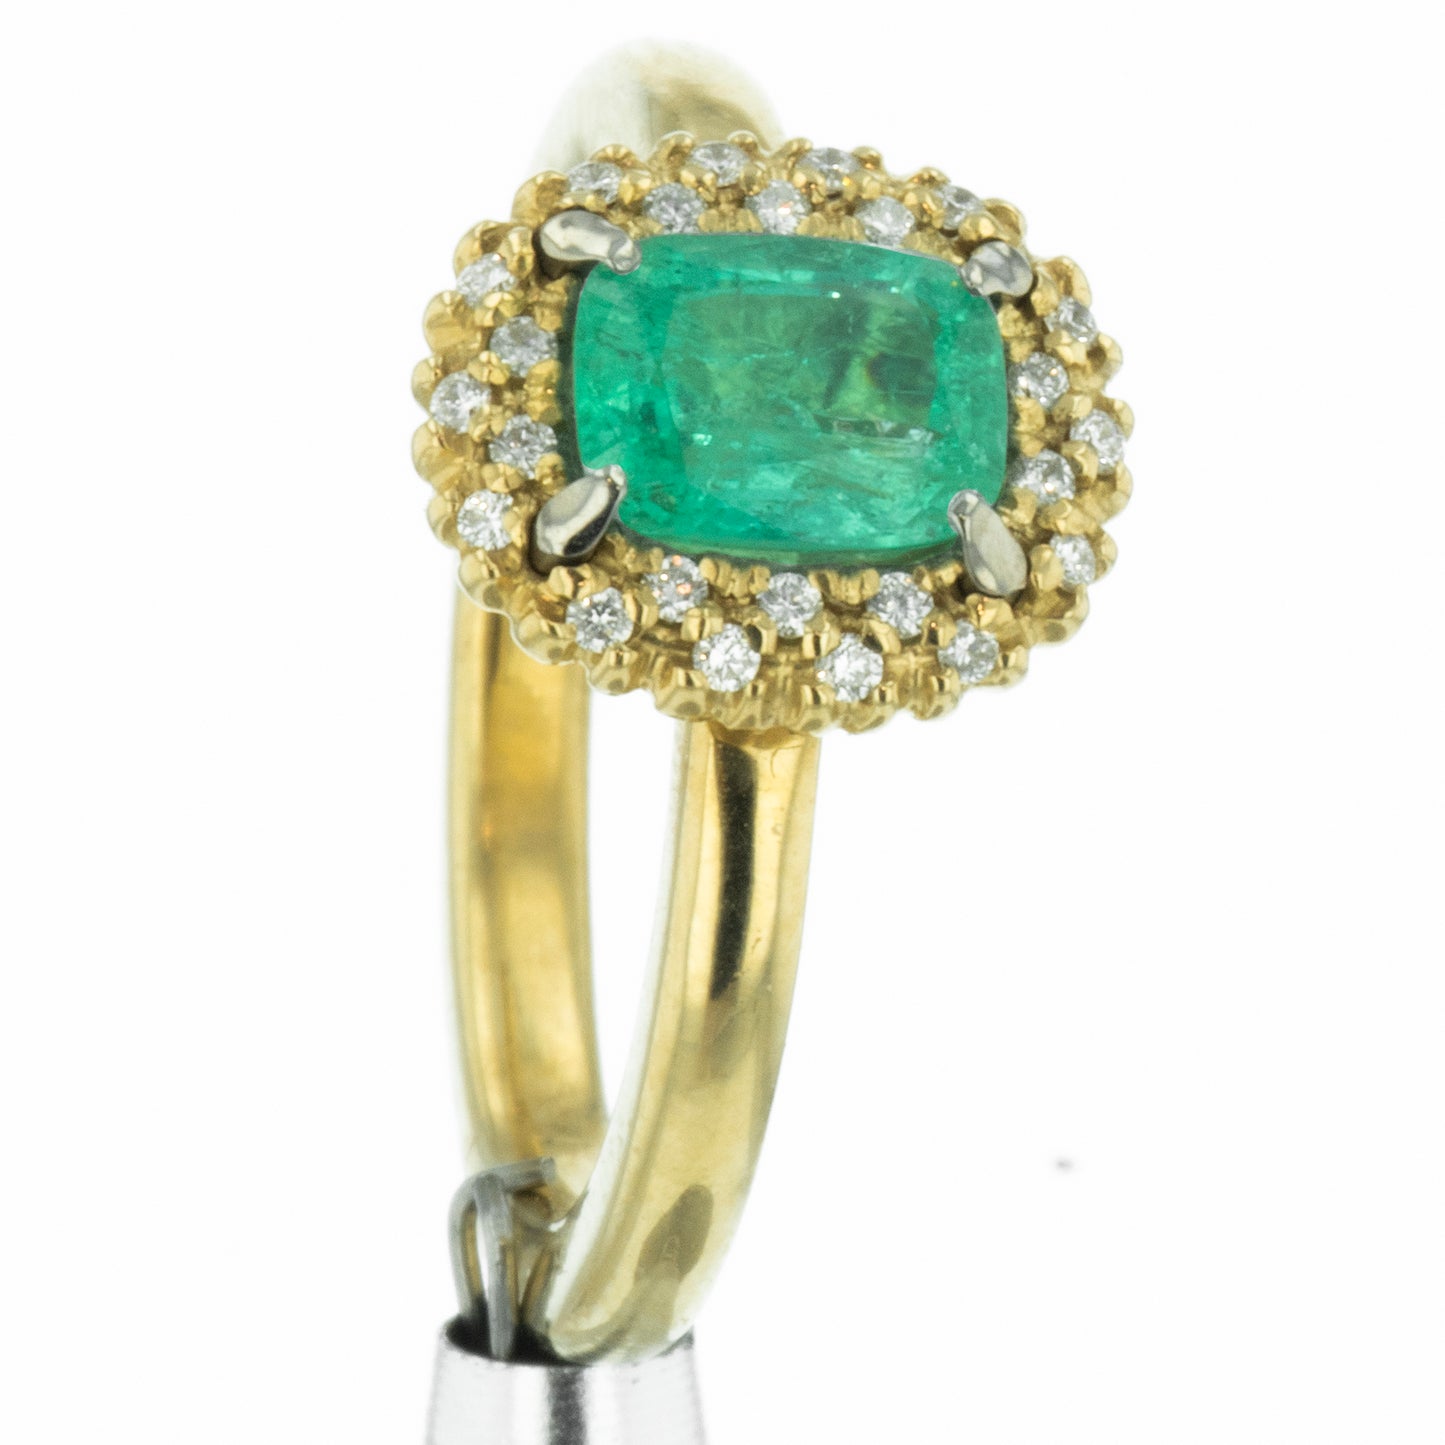 Emerald ring UK